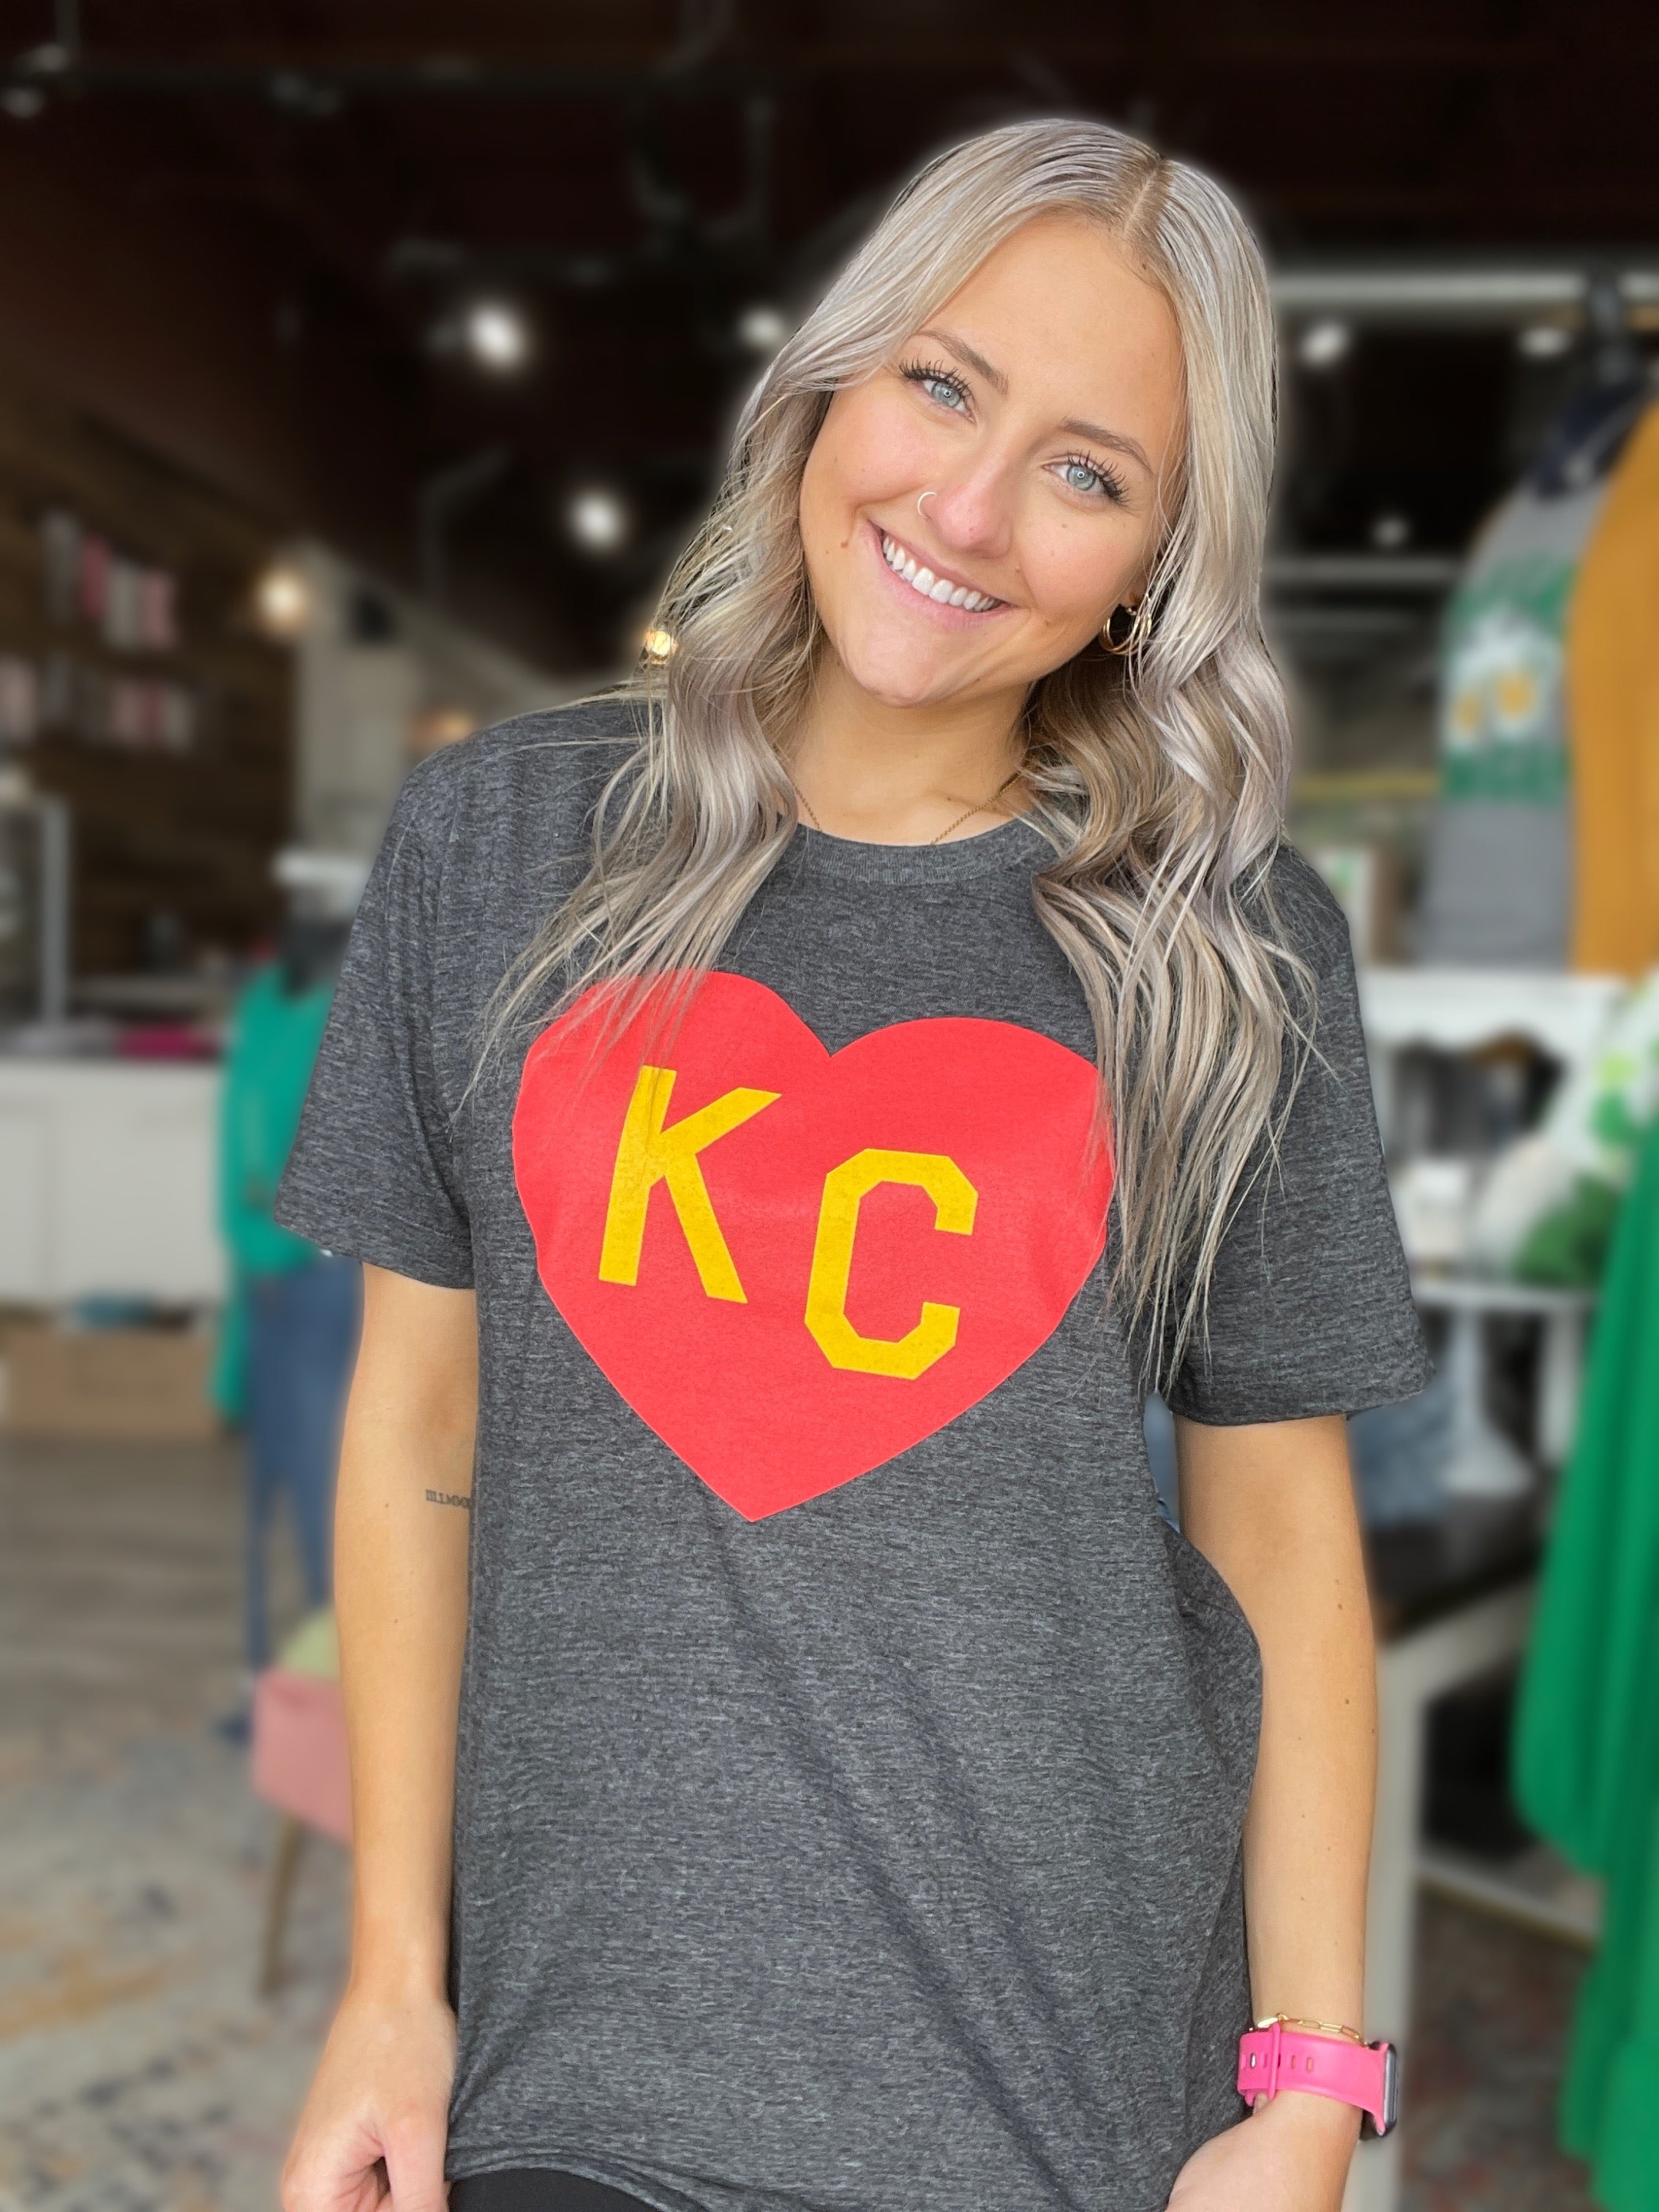 Charlie Hustle Kansas City Heart Tie Dye T-Shirt - Red - S (Small)